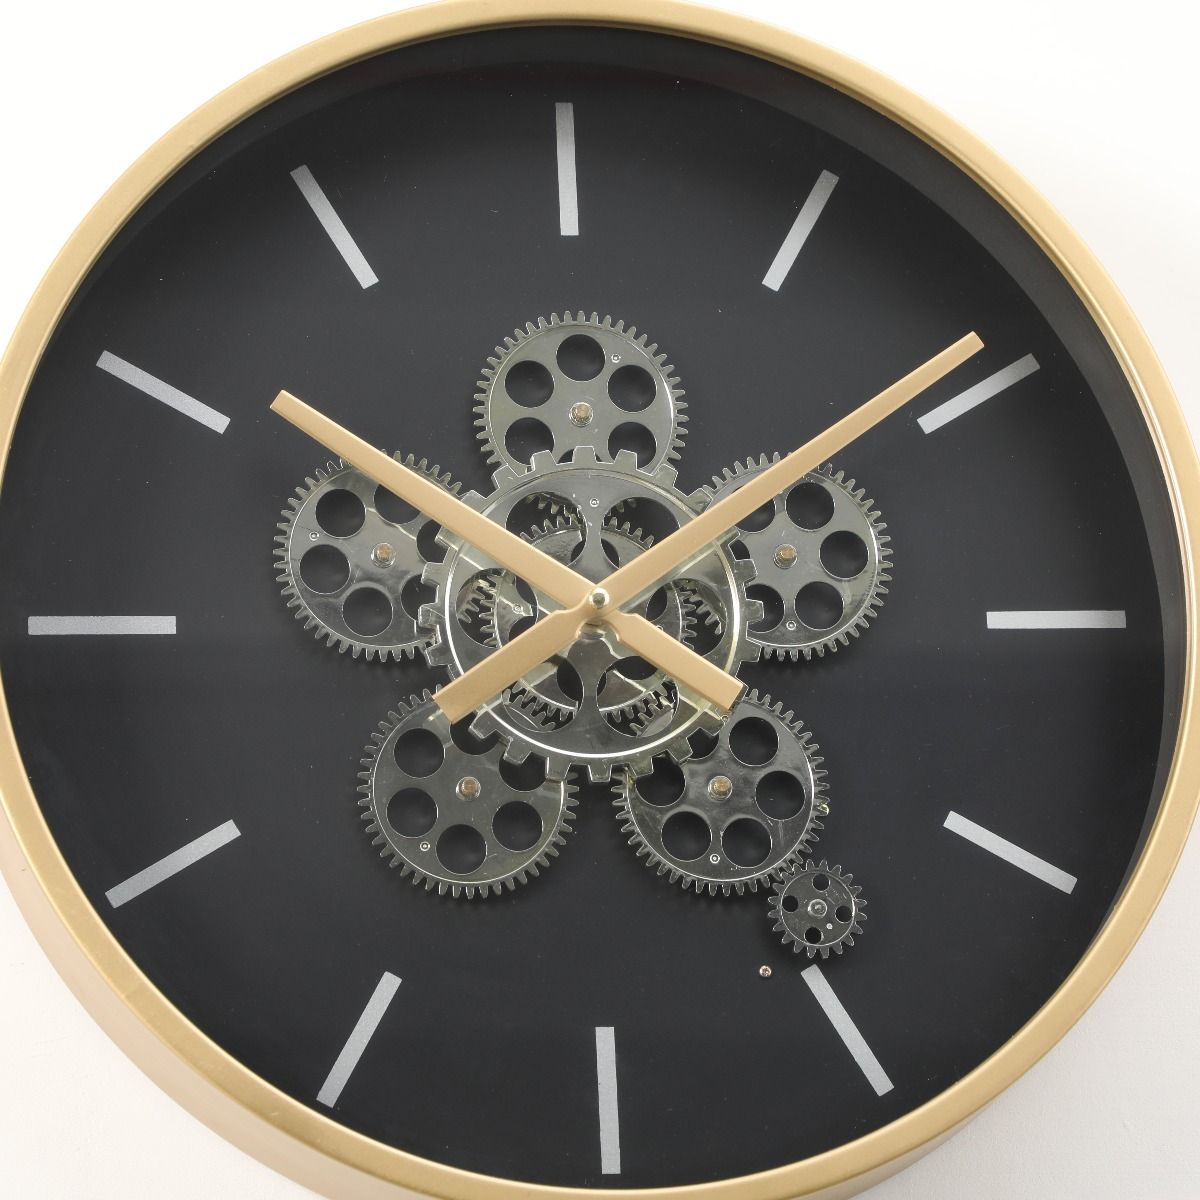 Industrial/vintage-inspired clock range - MODEL 022